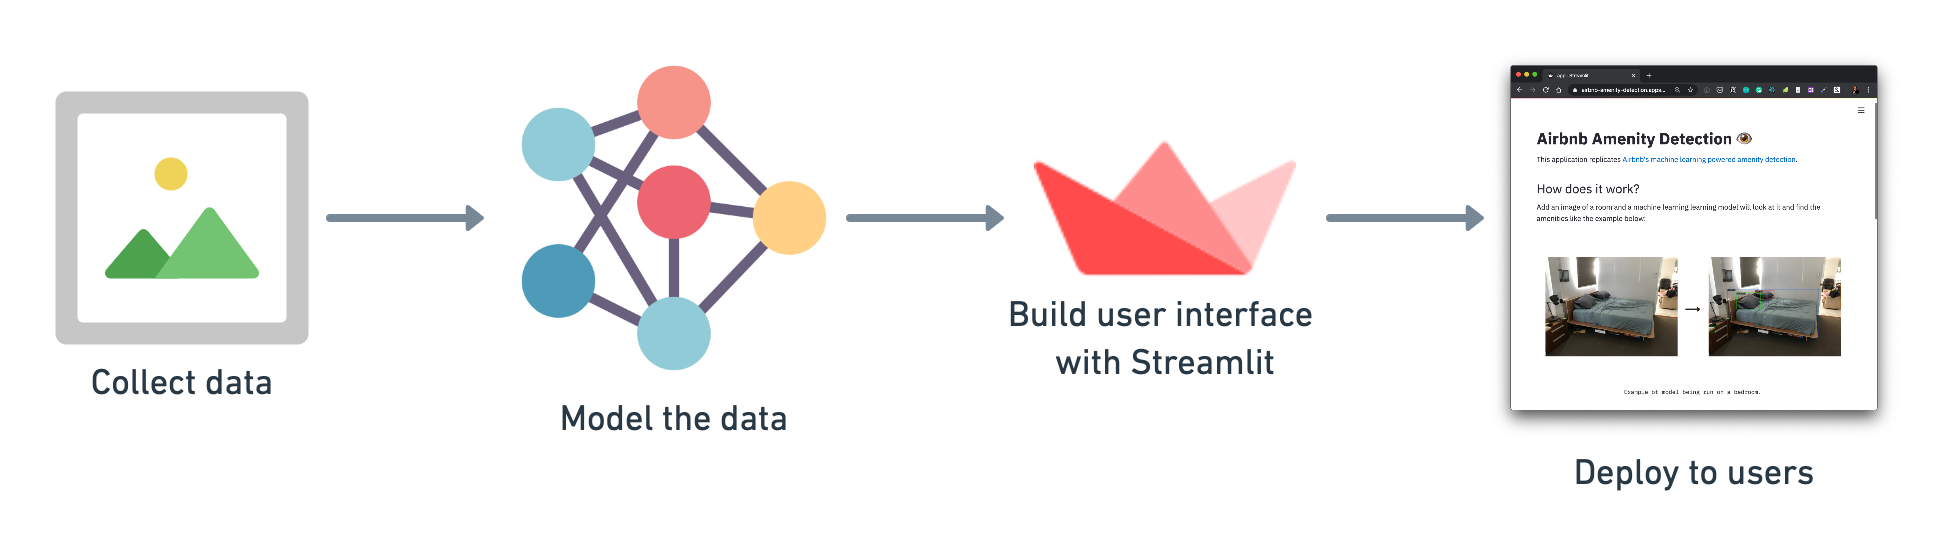 workflow for modern data science project development